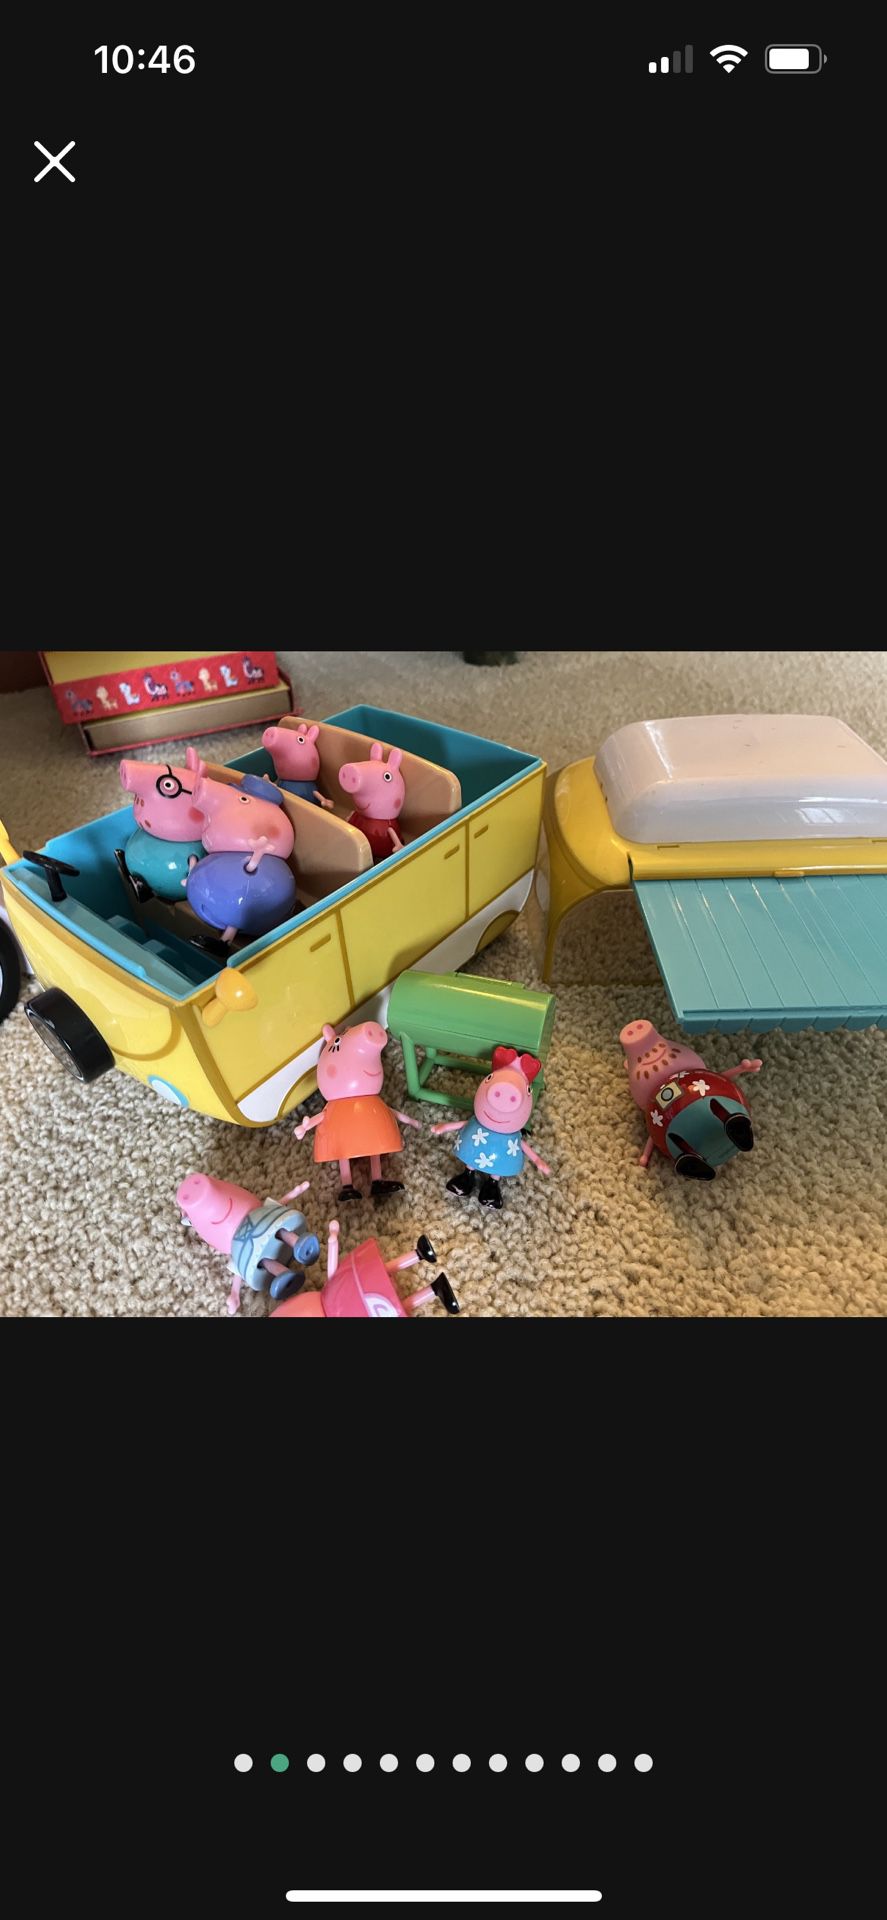 Lot Of Toys, Peppa Pig picnic van caravan. Tons of Peppa Pig, toys, and figurines. Barbie Ambulance, 2 soft heart throw pillows, gymnastics Barbie, ho